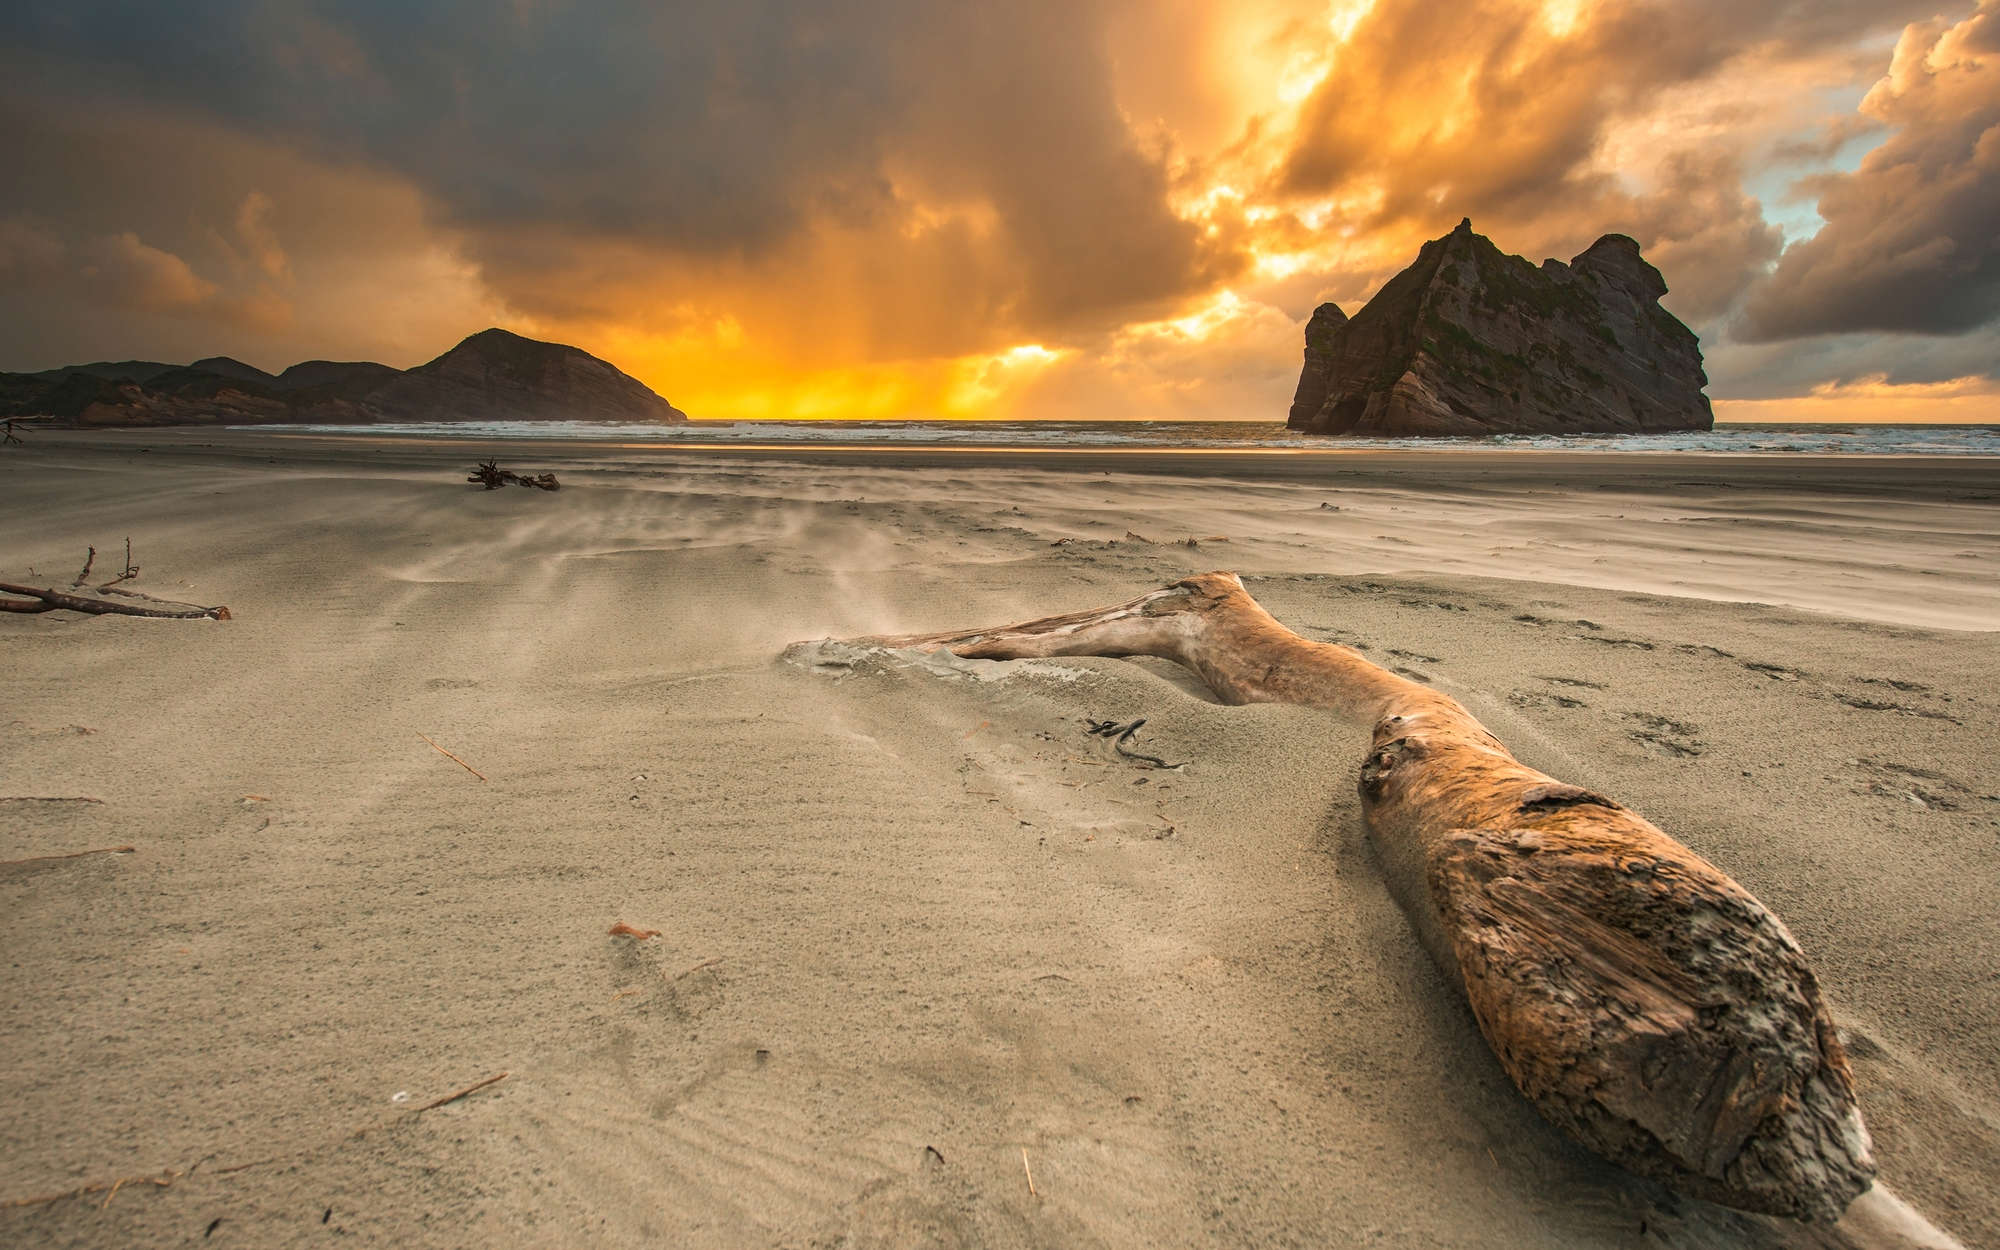             Fototapete Strand in Neuseeland – Perlmutt Glattvlies
        